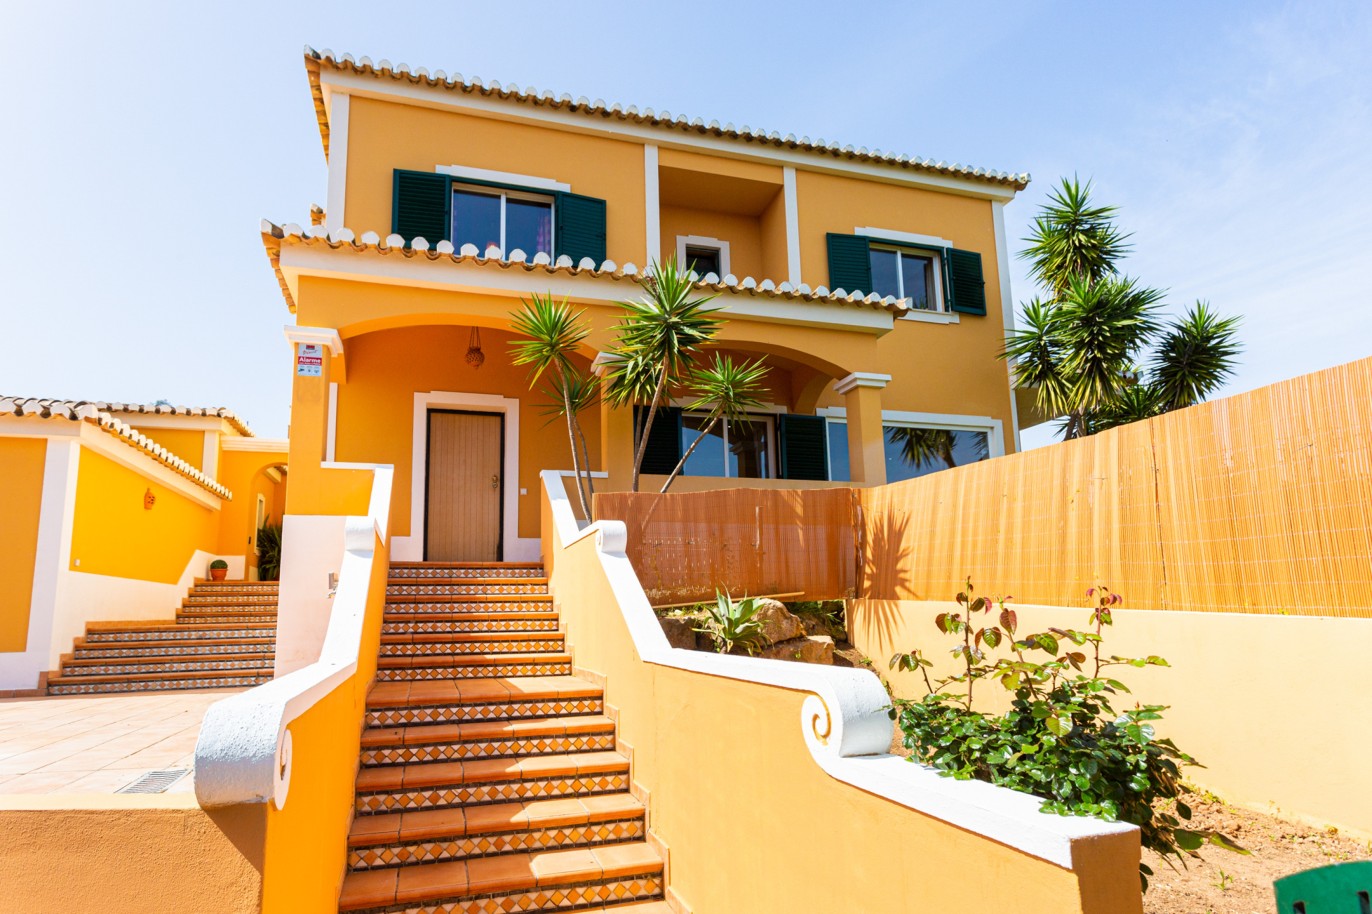 5 Bedroom Villa with 2 Bedroom Annex, for sale, in Alvor, Algarve_220960